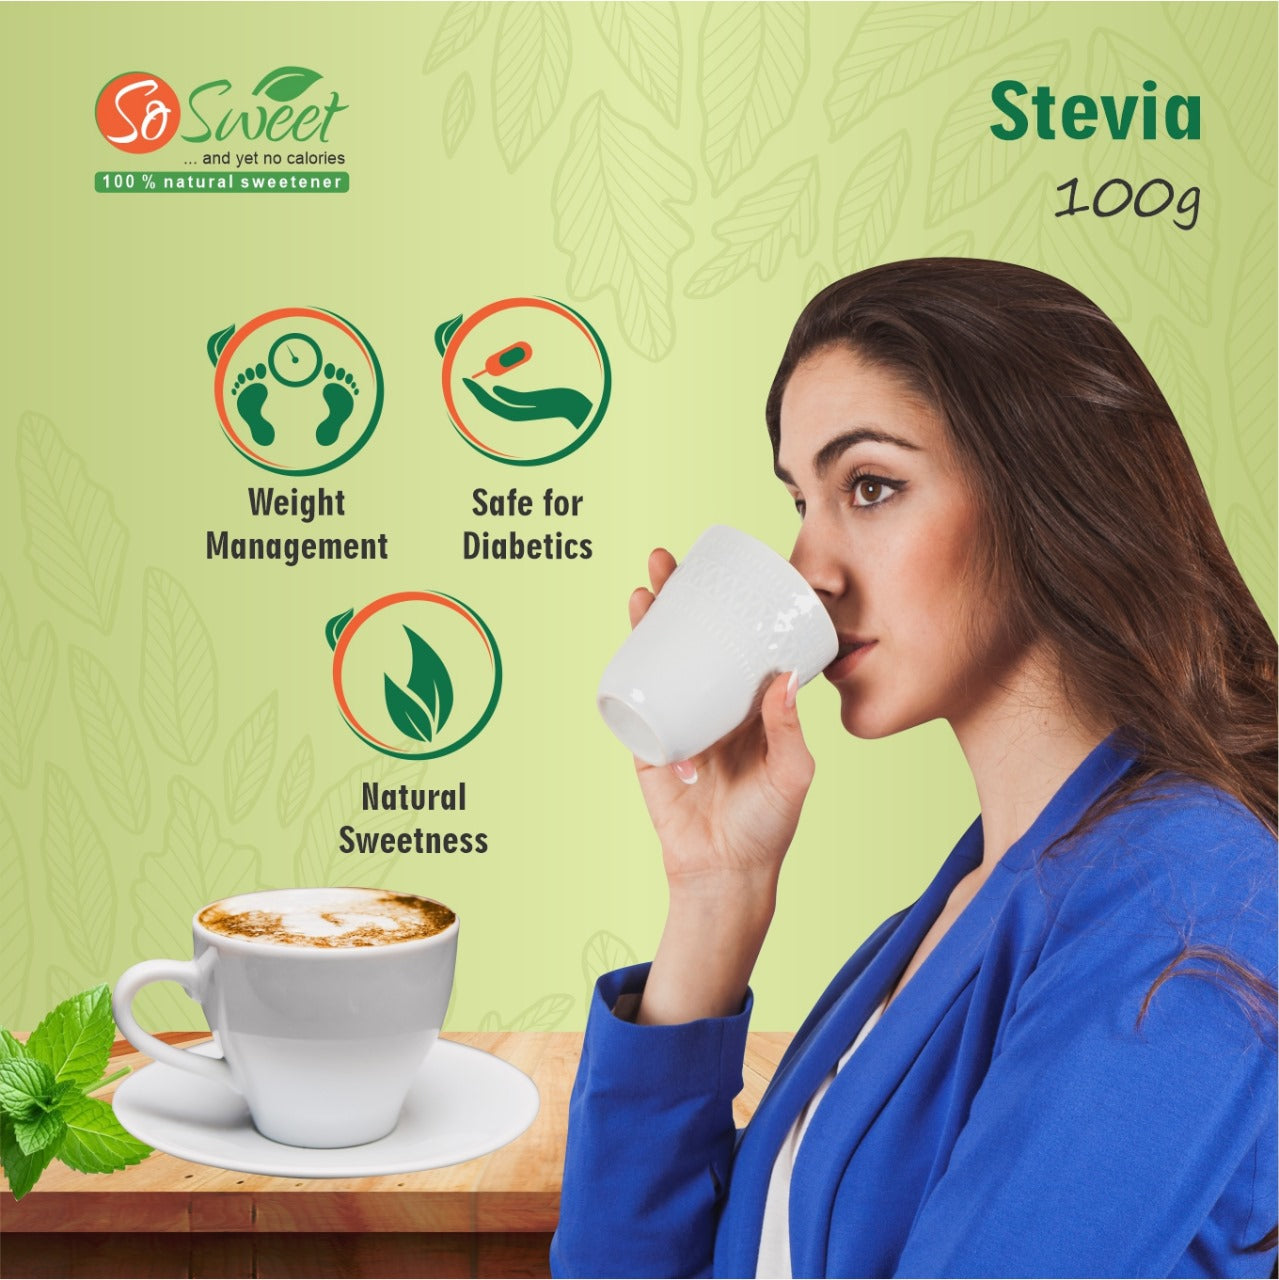 So Sweet Stevia 500 Stevia Tablets and Stevia 100 gm Spoonable Bottle 100% Natural Sweetener for Diabetics - Sugar free (Pack of 2)